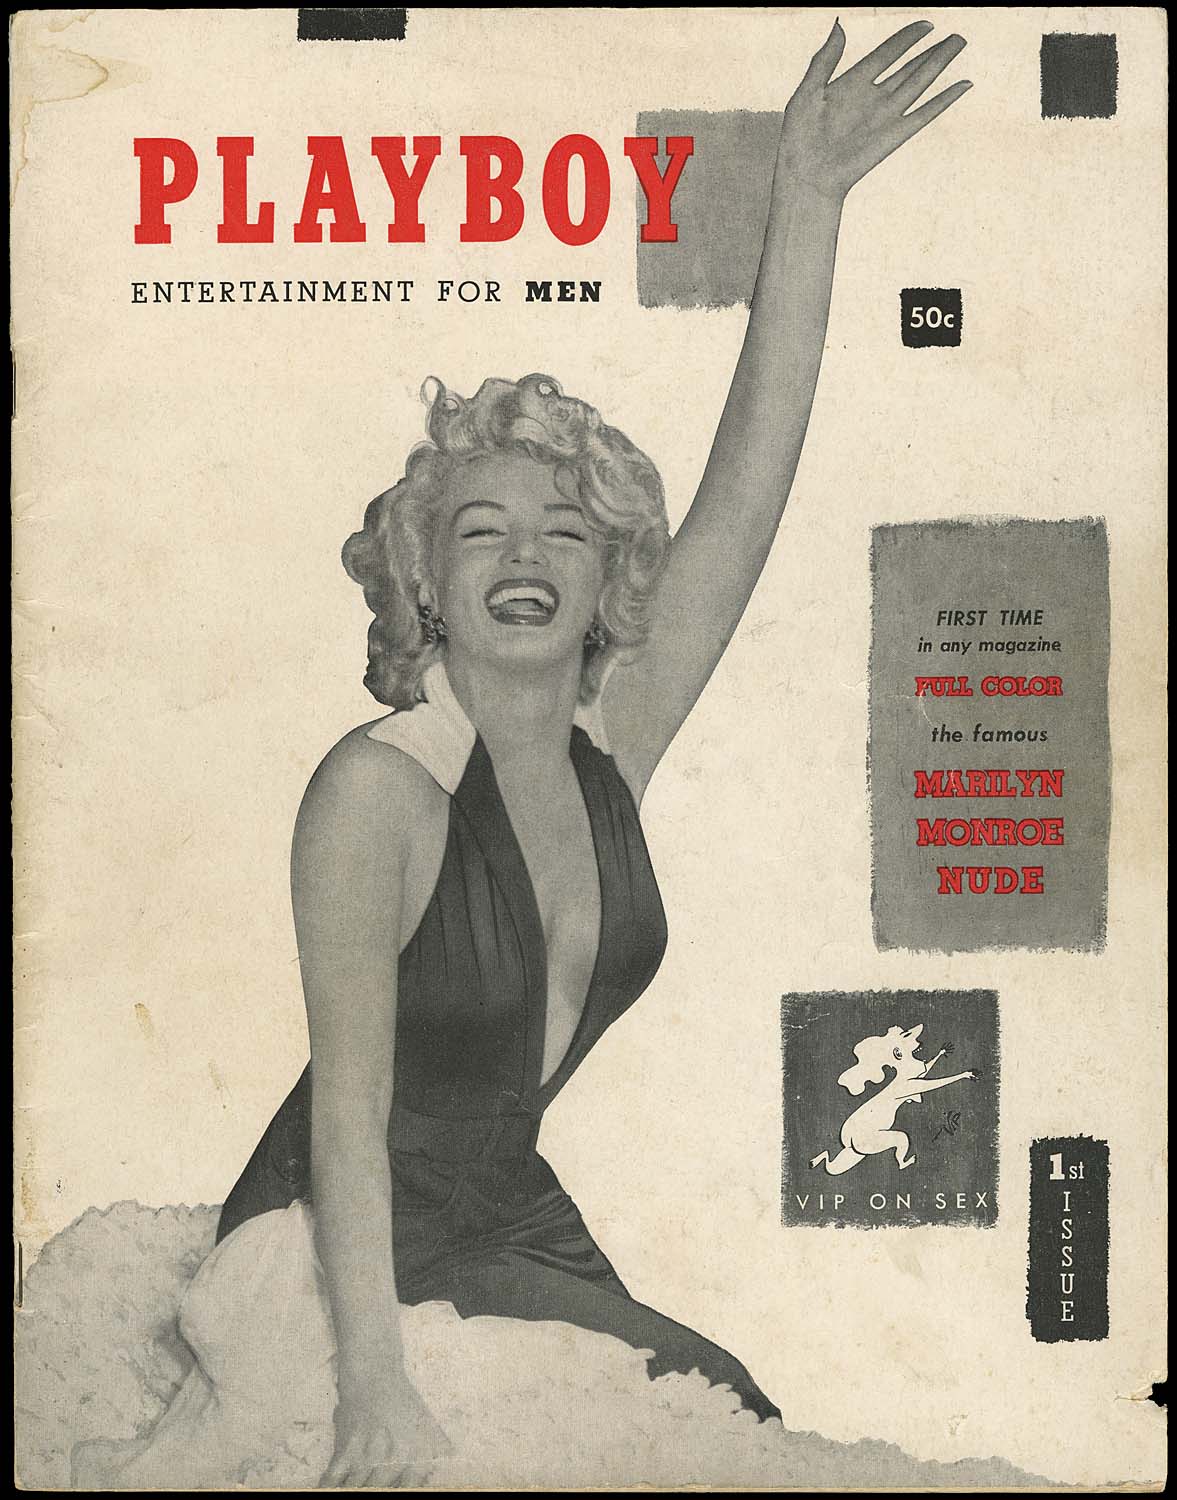 1953 Playboy Magazine Volume 1, Number 1, Inaugural Issue